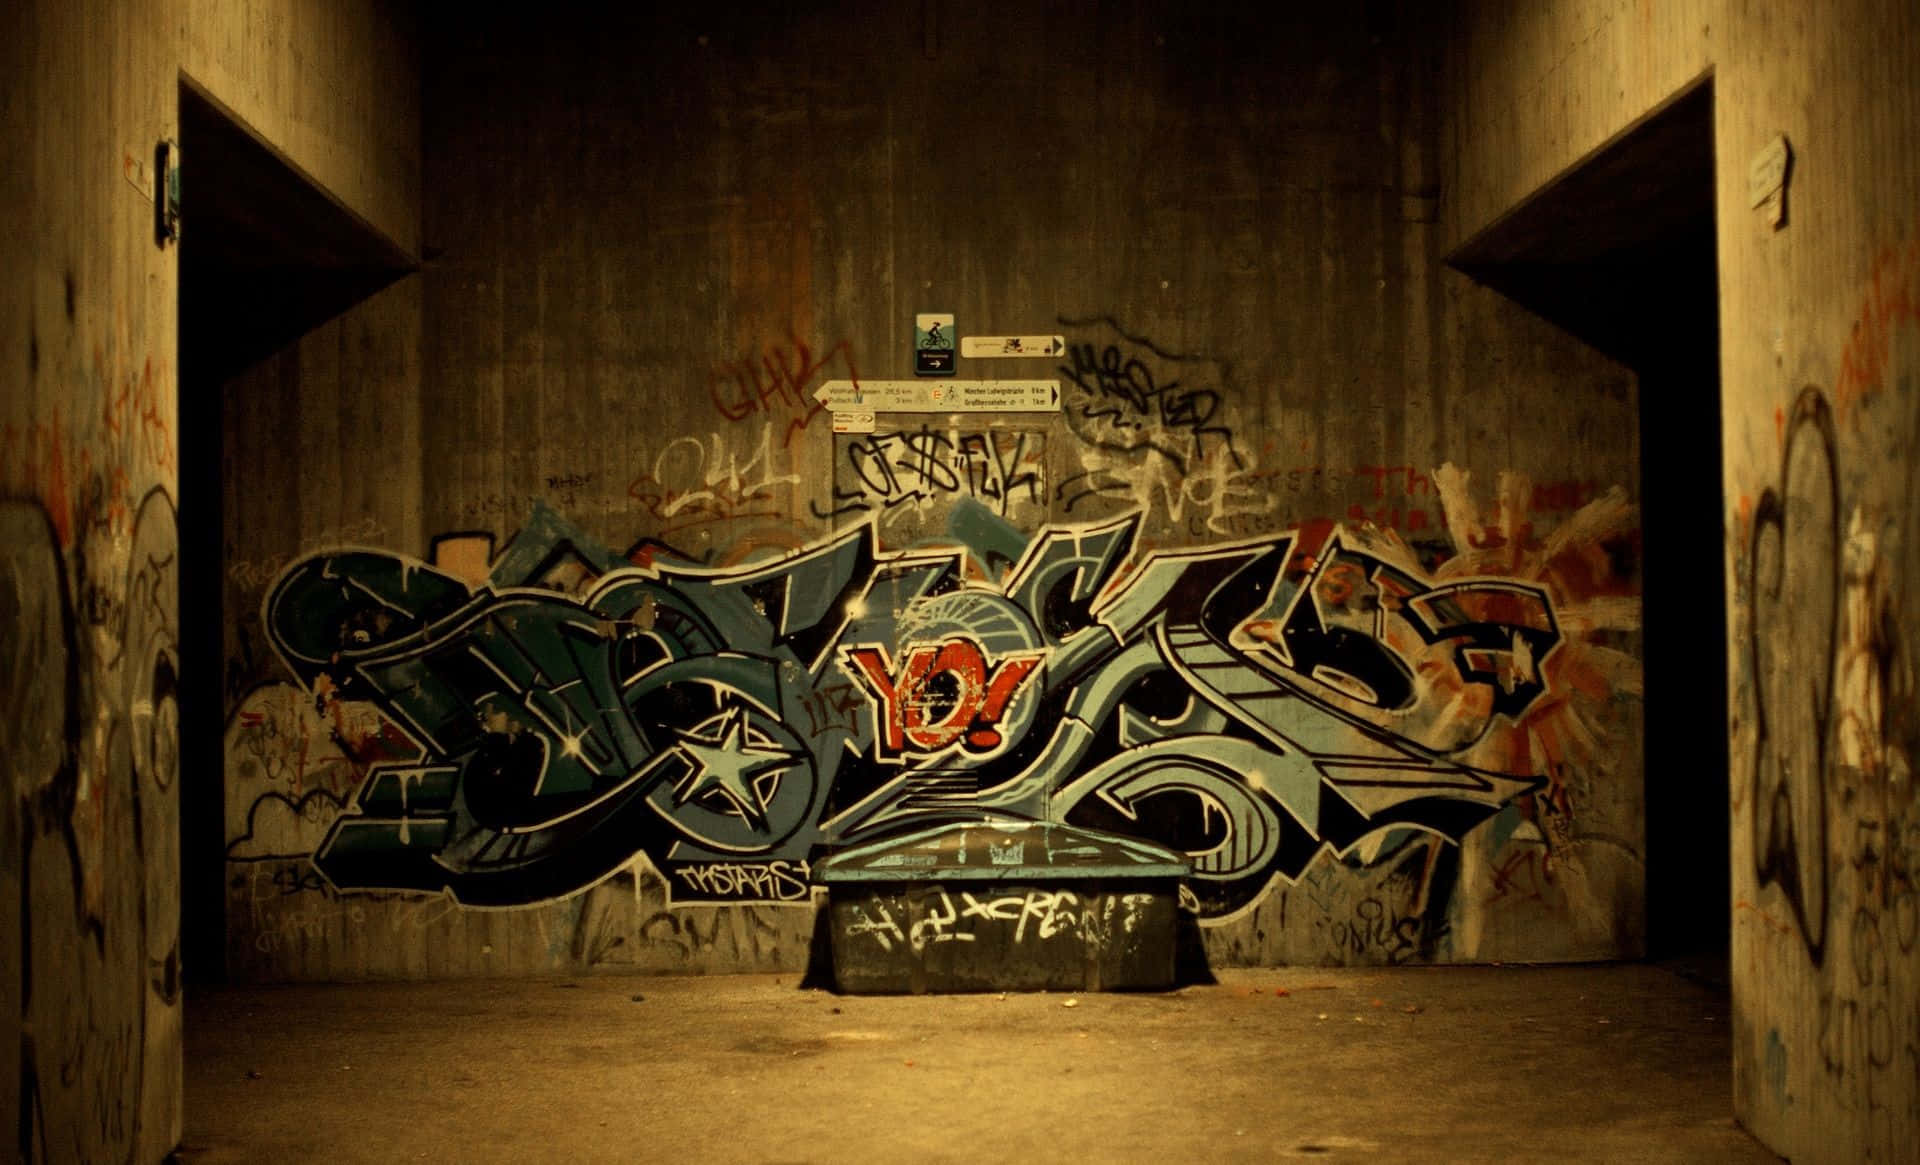 Creativity comes alive through hip hop graffiti Wallpaper